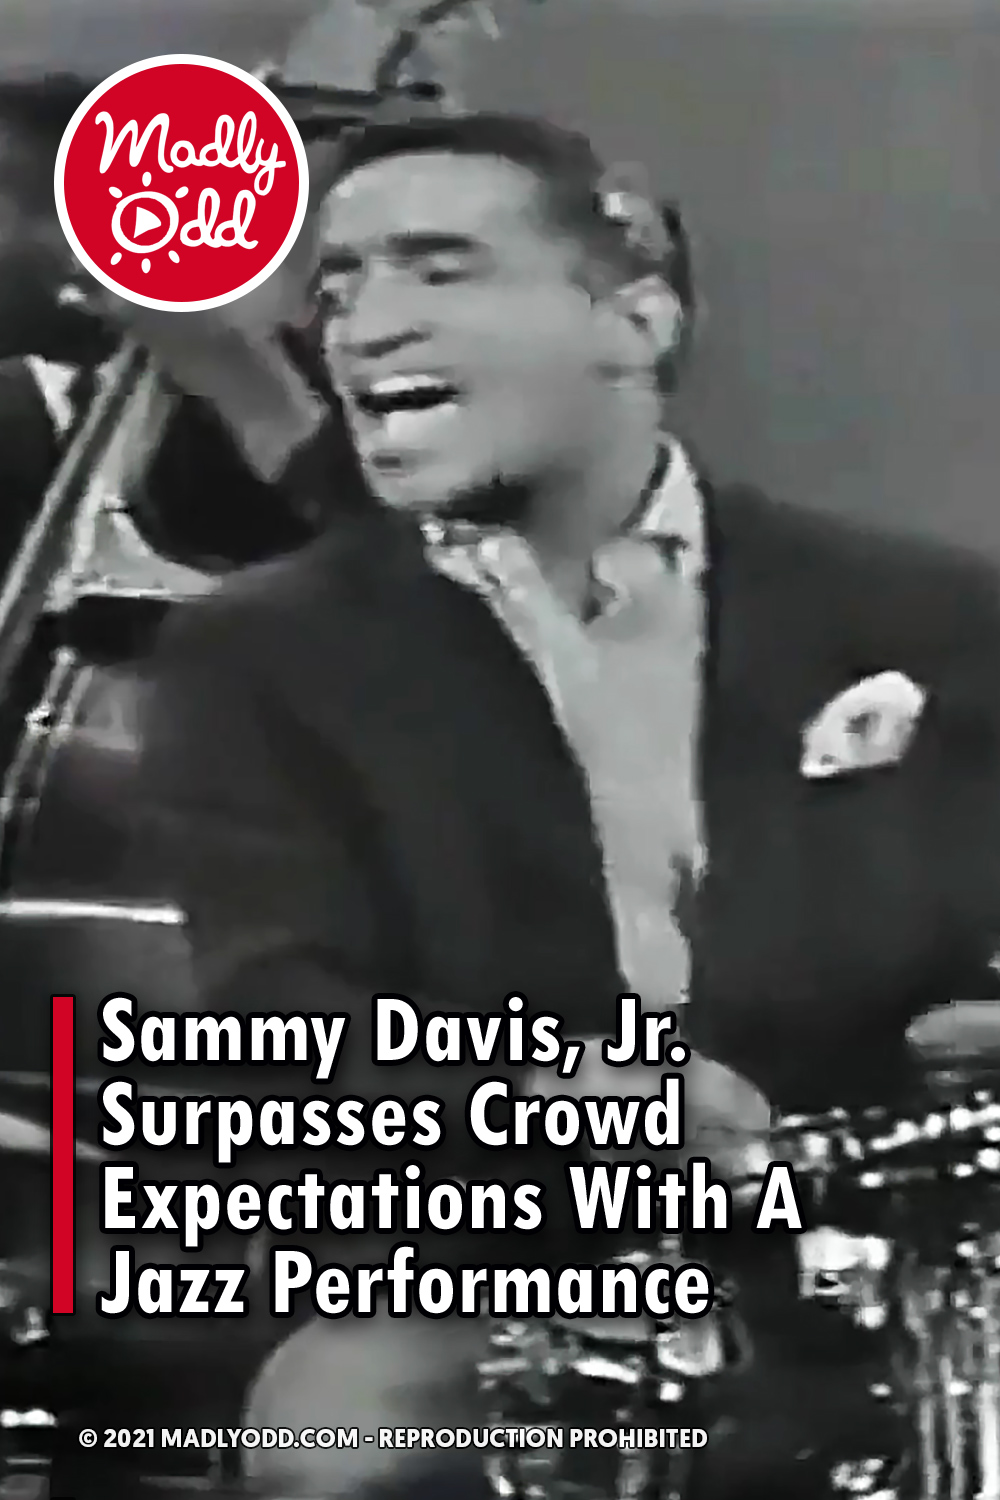 Sammy Davis, Jr. Surpasses Crowd Expectations With A Jazz Performance